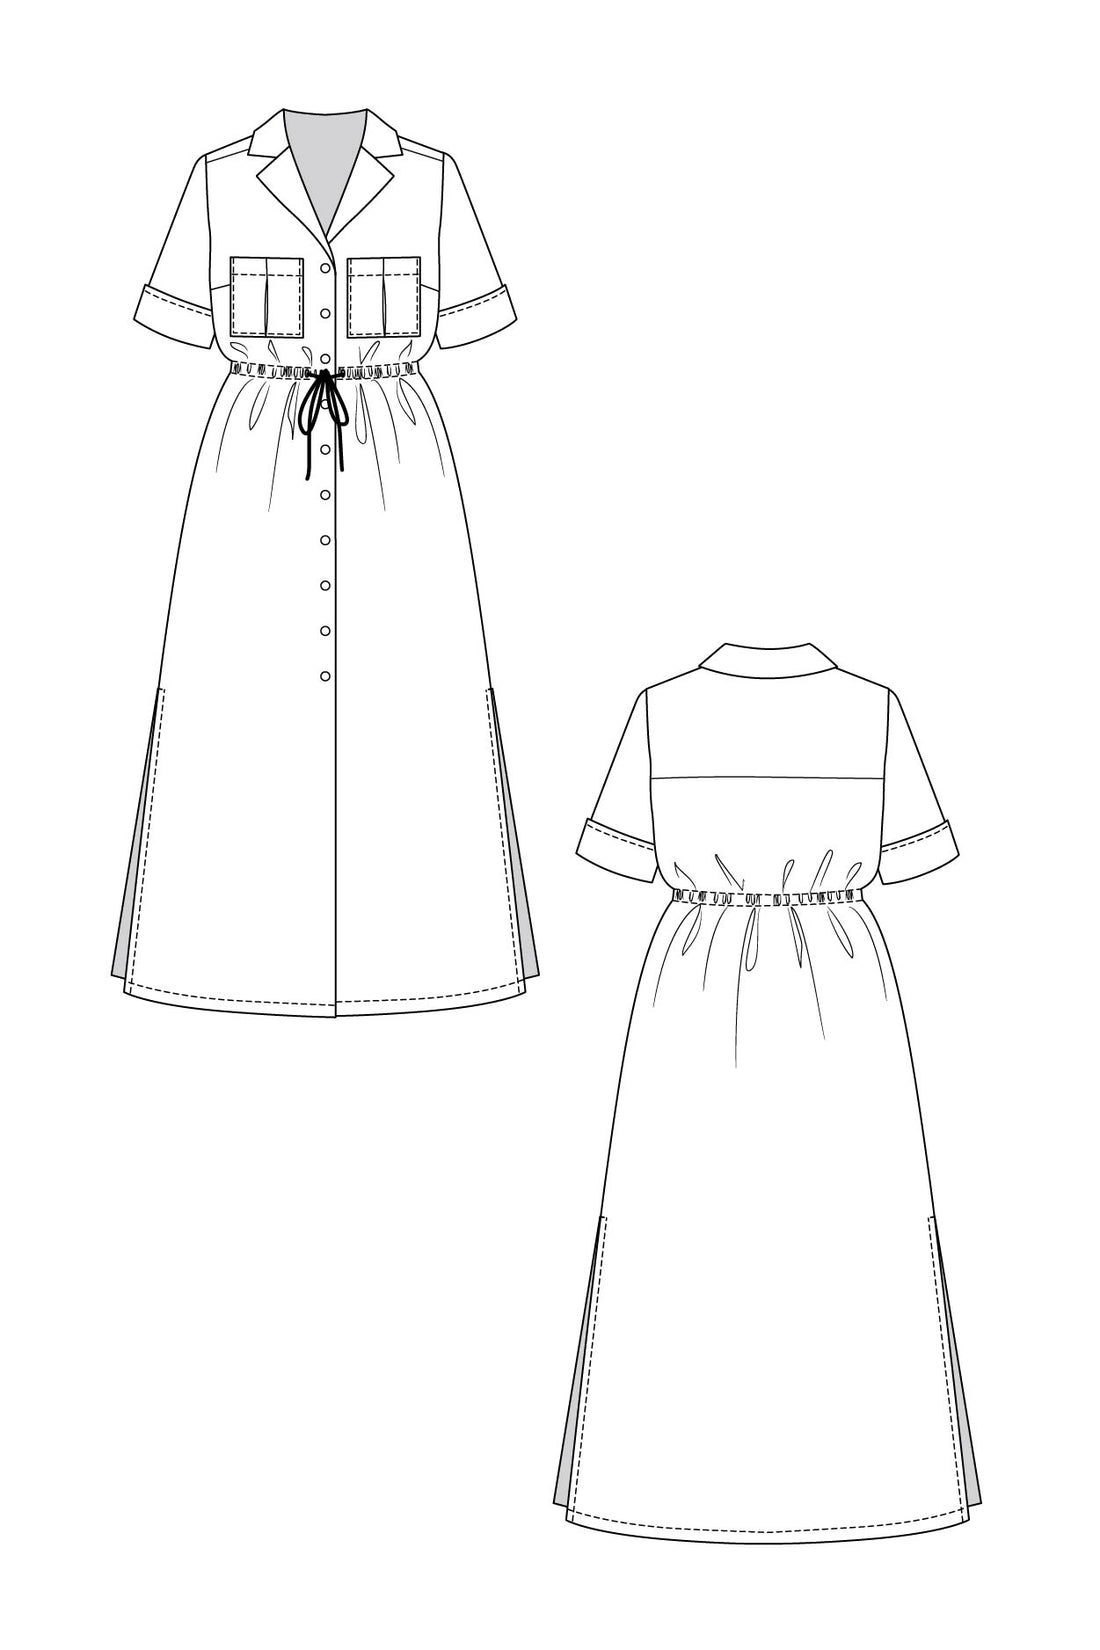 Papírový střih Reeta Shirt Dress || Košilové šaty